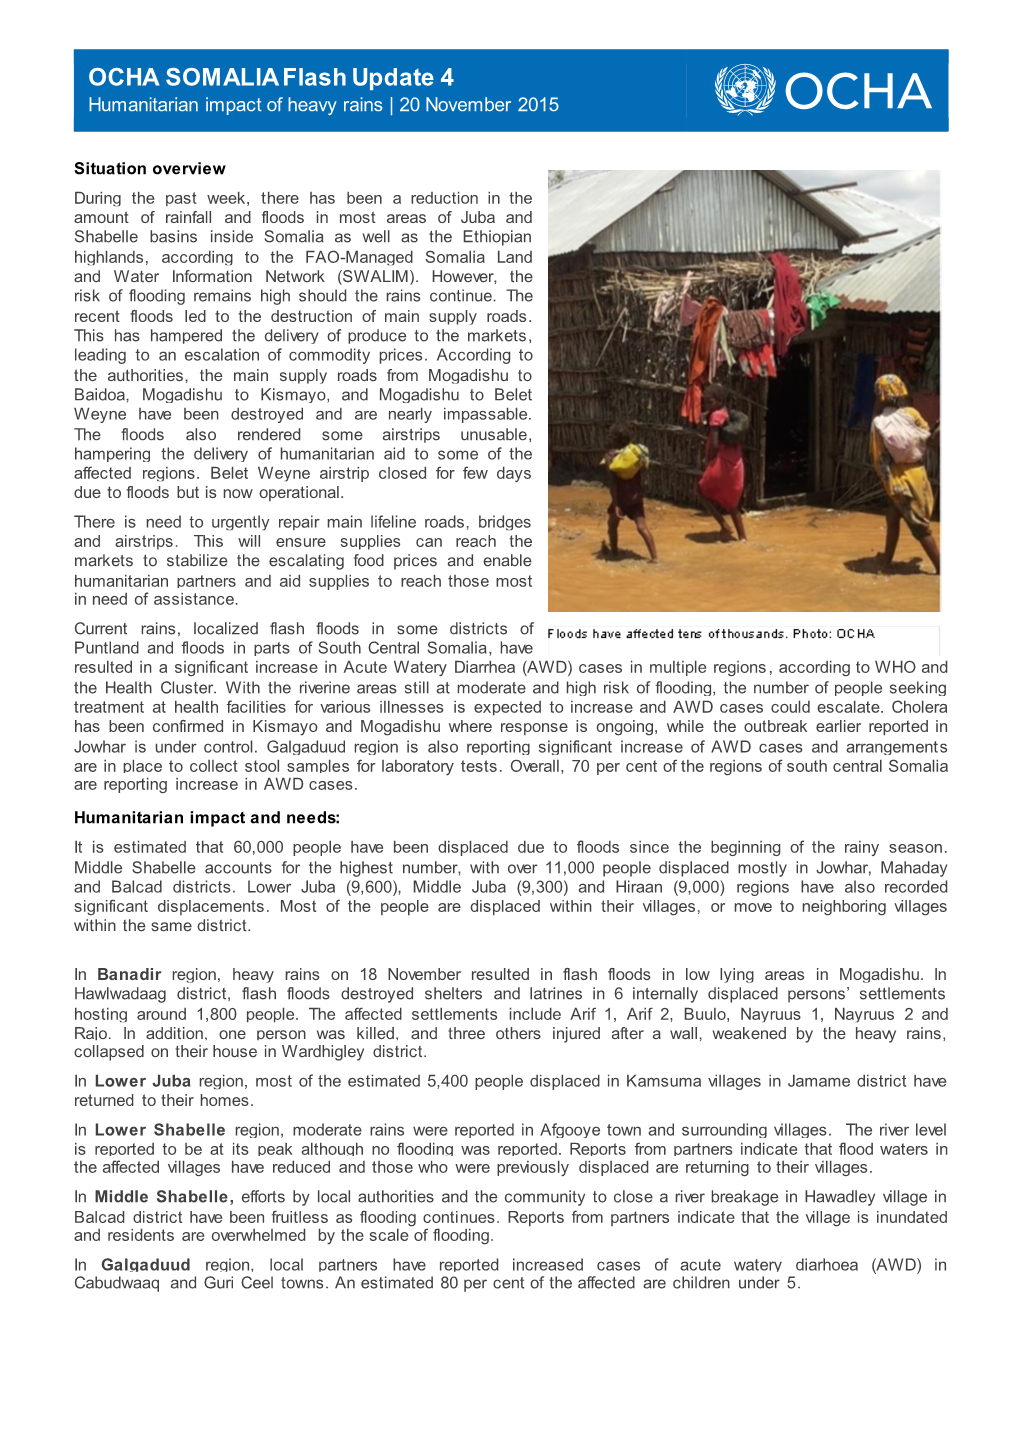 OCHA SOMALIA Flash Update 4 Humanitarian Impact of Heavy Rains | 20 November 2015